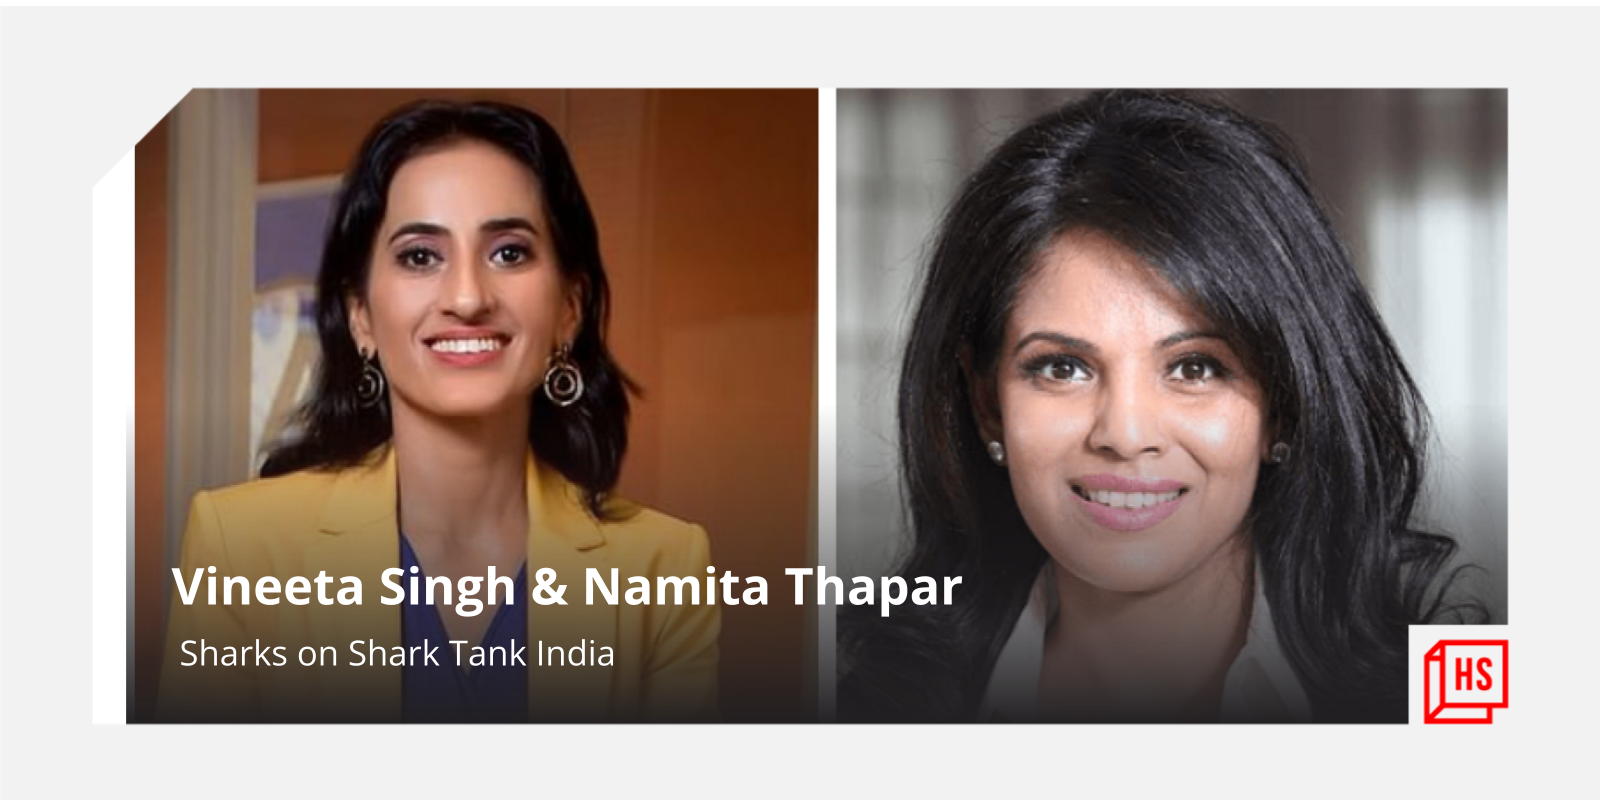 HerStory Conversations] Meet Namita Thapar and Vineeta Singh